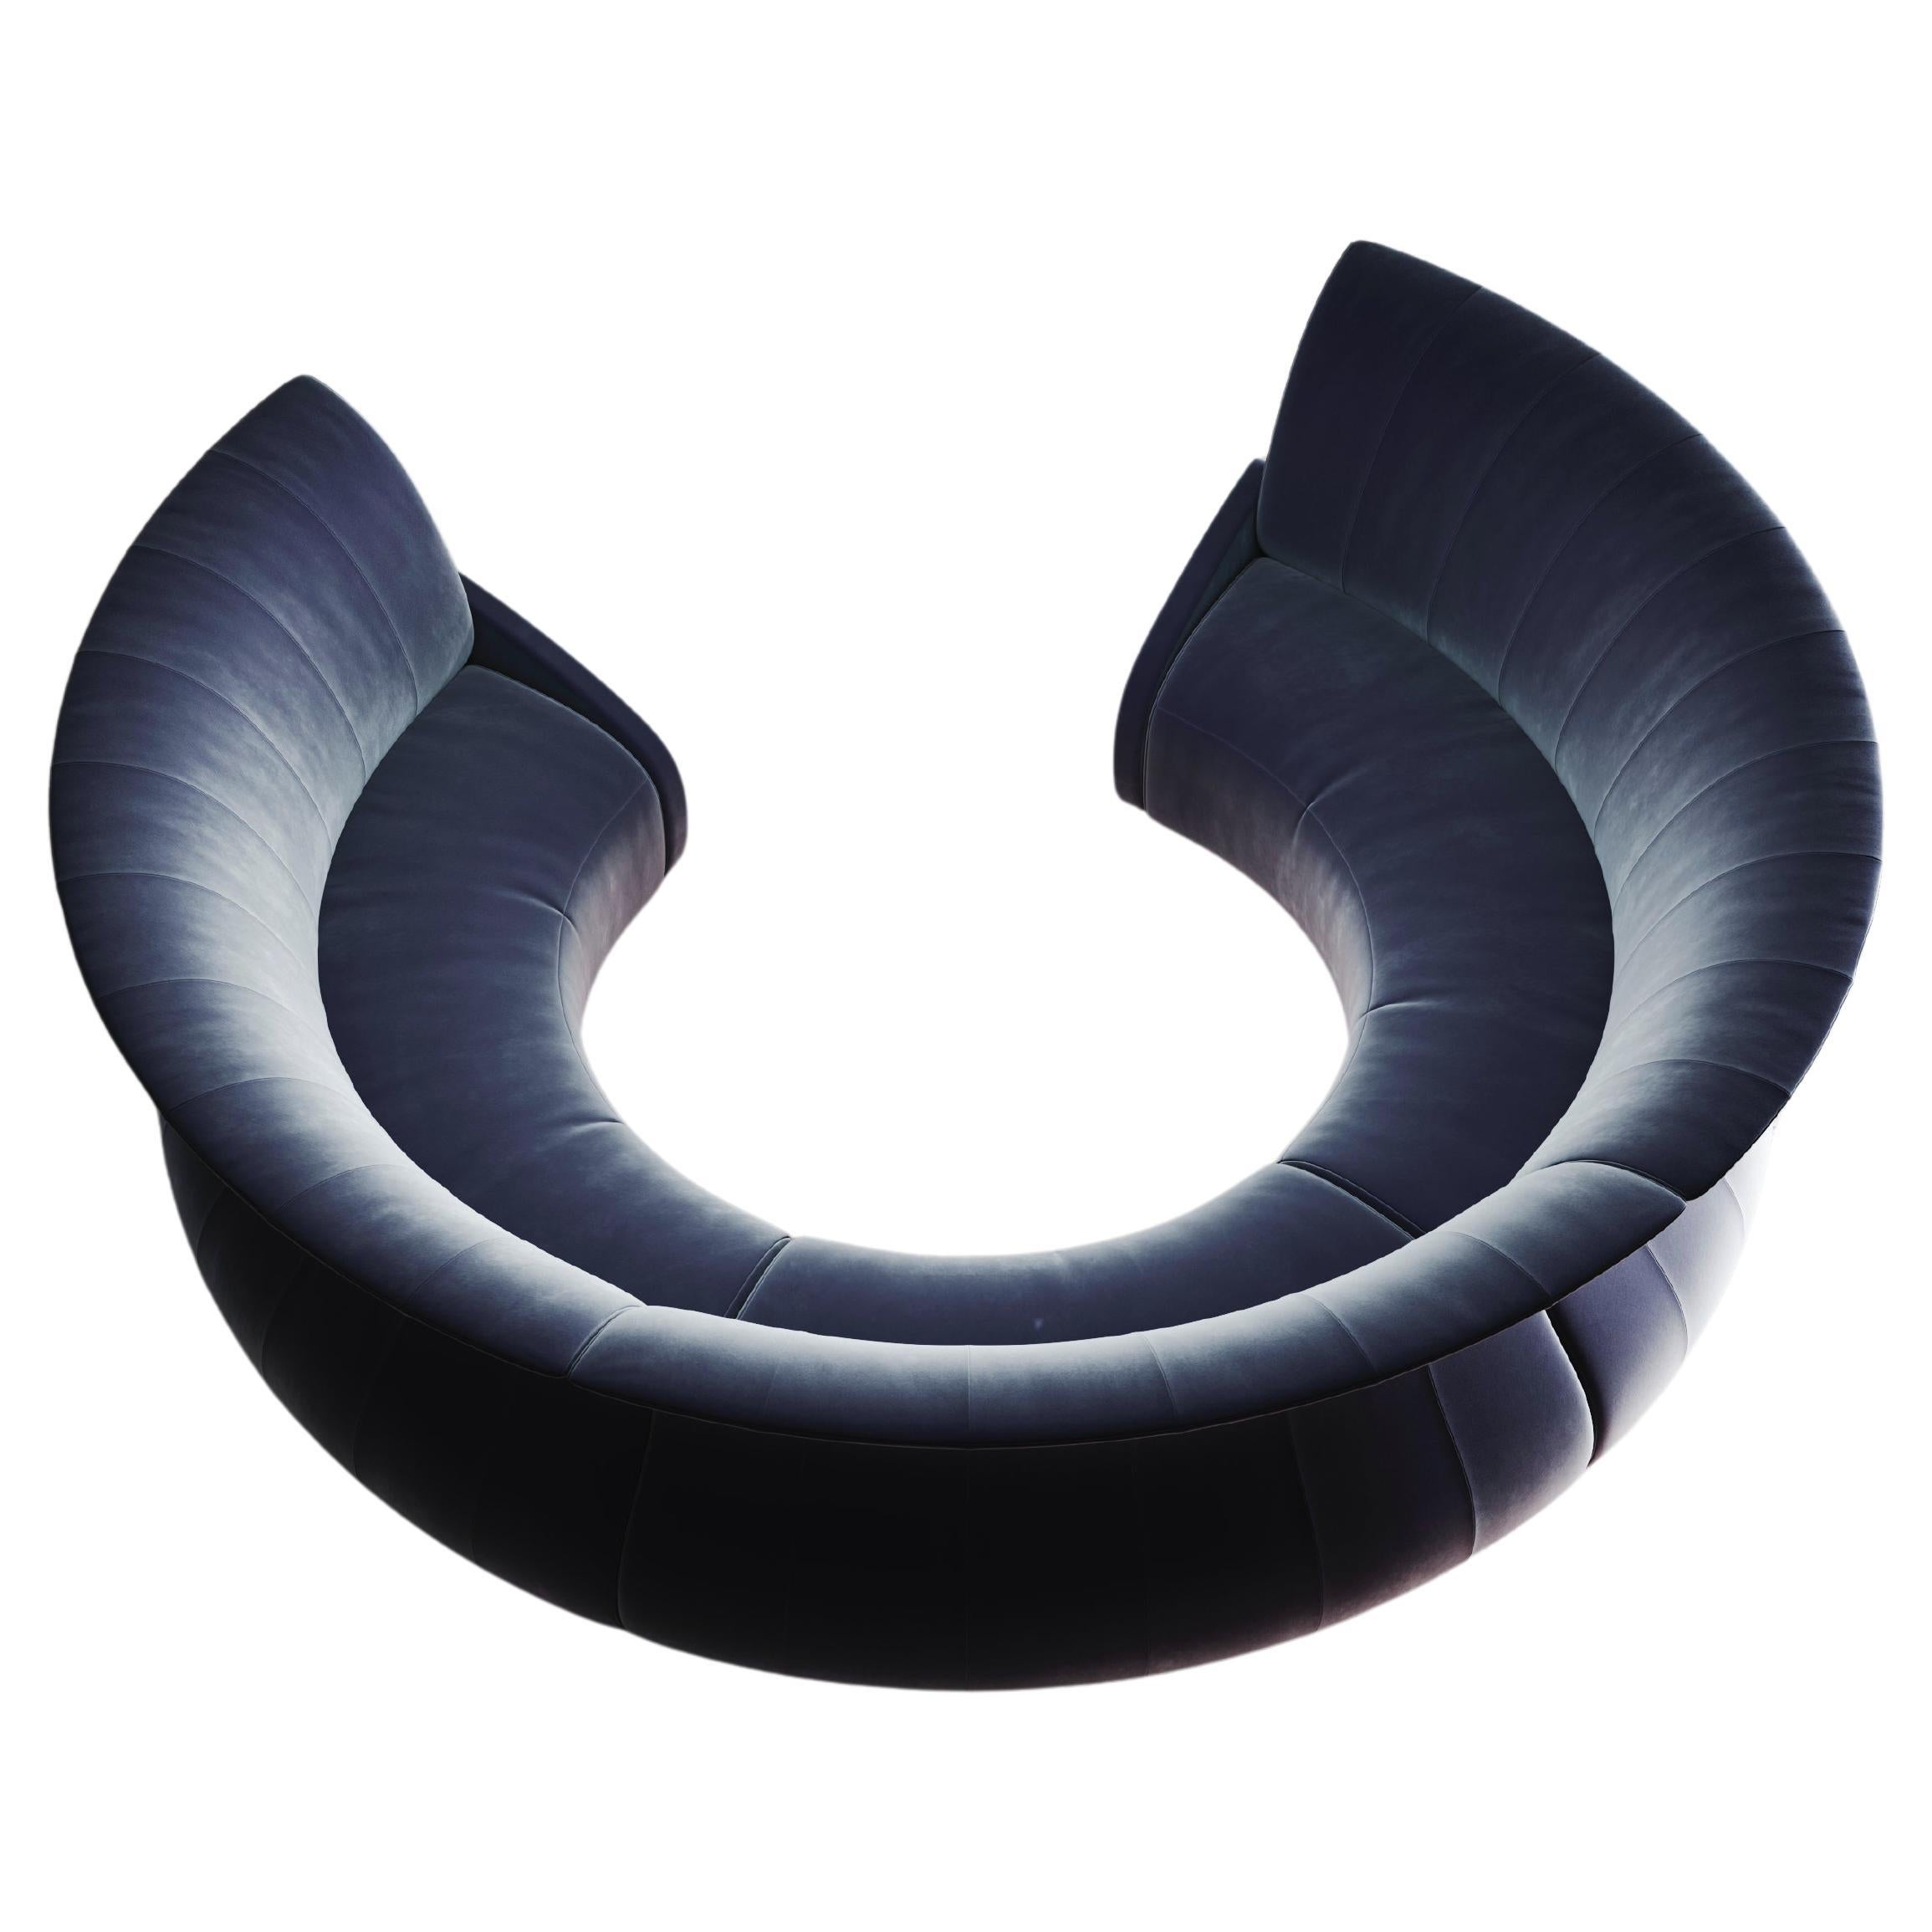 Sculptural Made to Order Modernist Eclipse round sofa